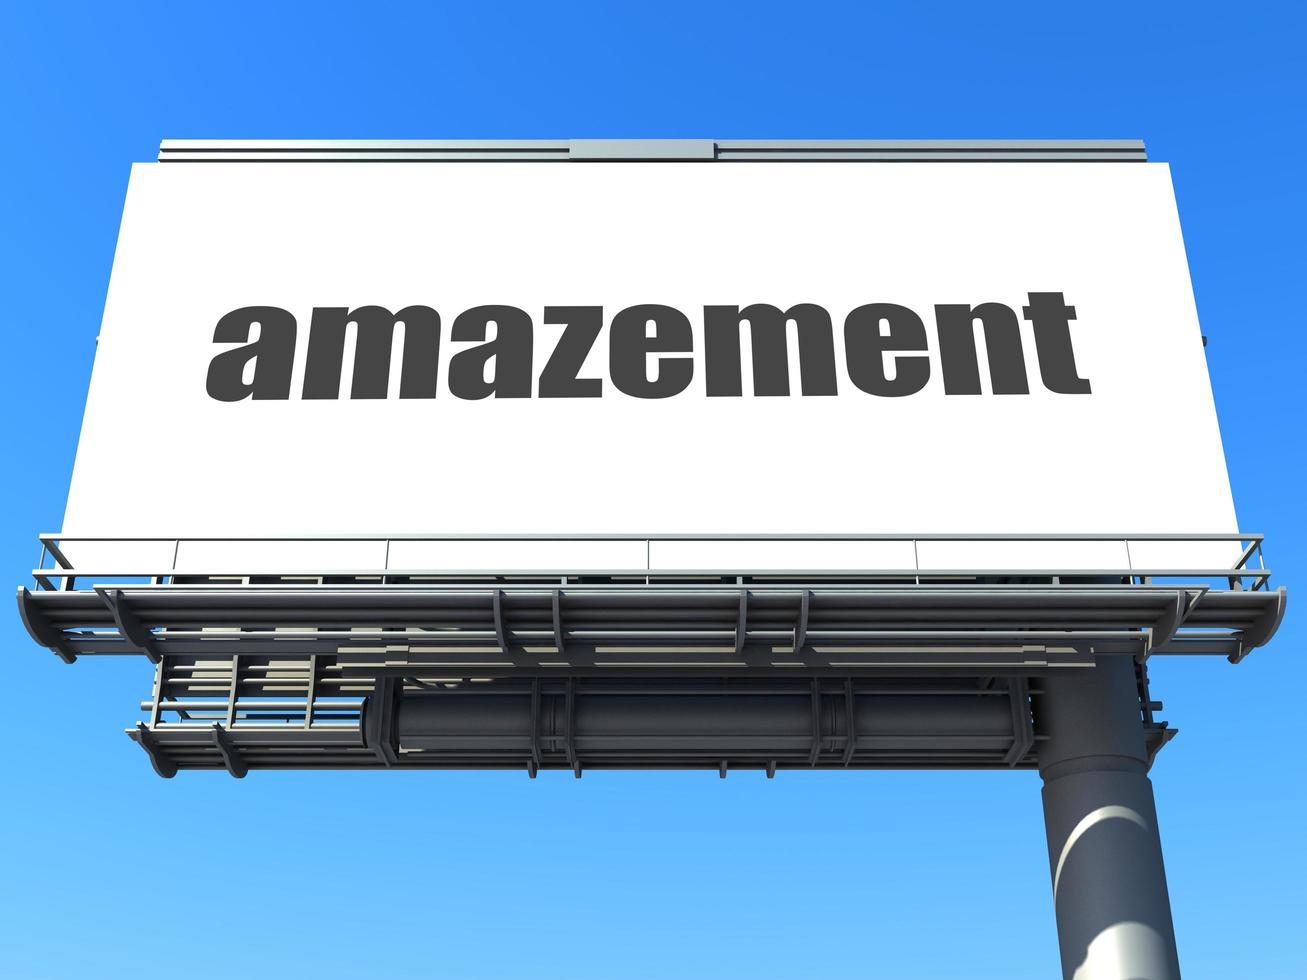 amazement word on billboard photo